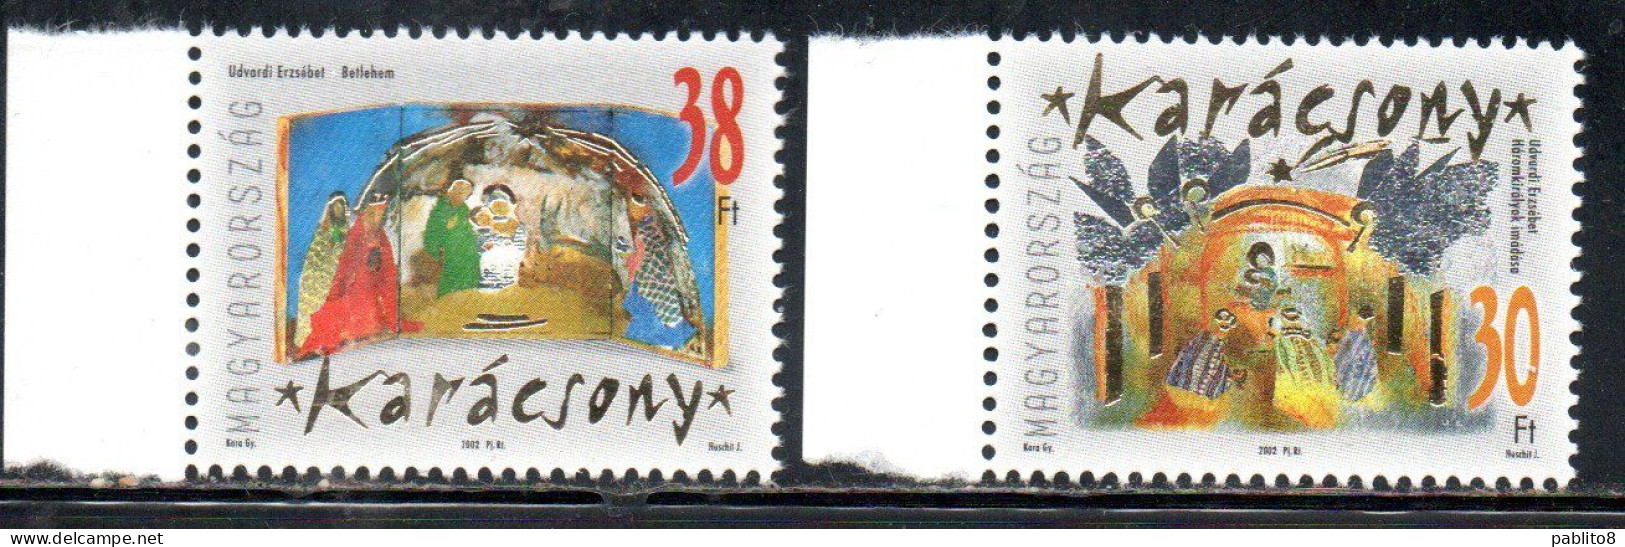 HUNGARY UNGHERIA MAGYAR 2002 CHRISTMAS NATALE NOEL WEIHNACHTEN NAVIDAD COMPLETE SET SERIE COMPLETA MNH - Unused Stamps